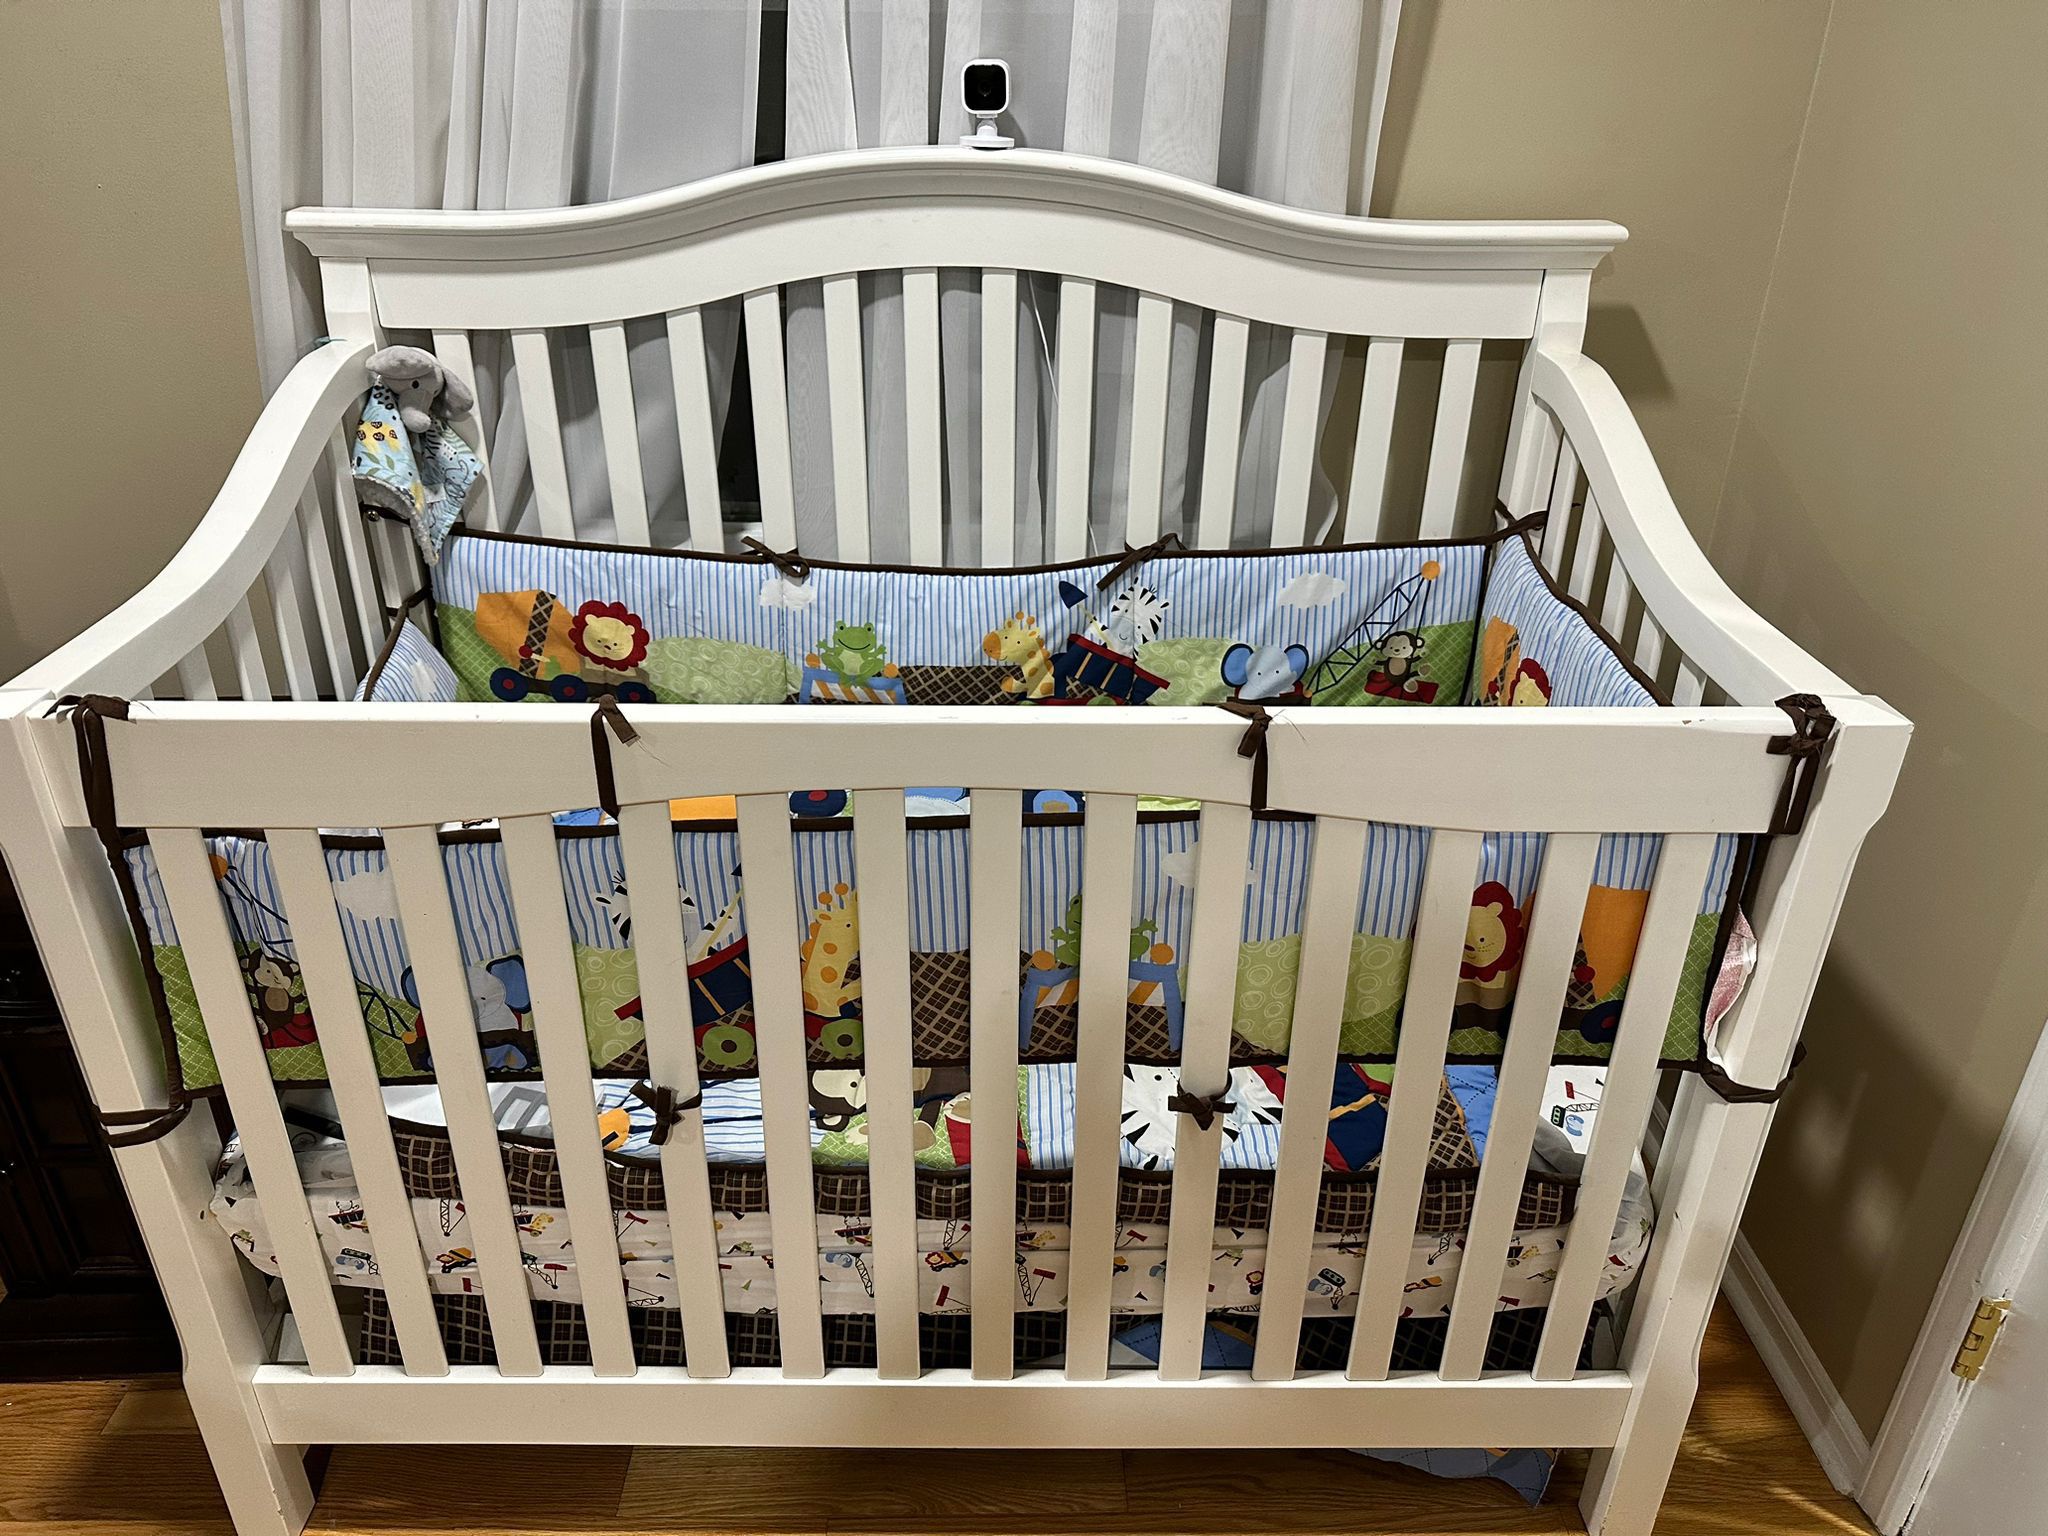 Baby Crib With mattress